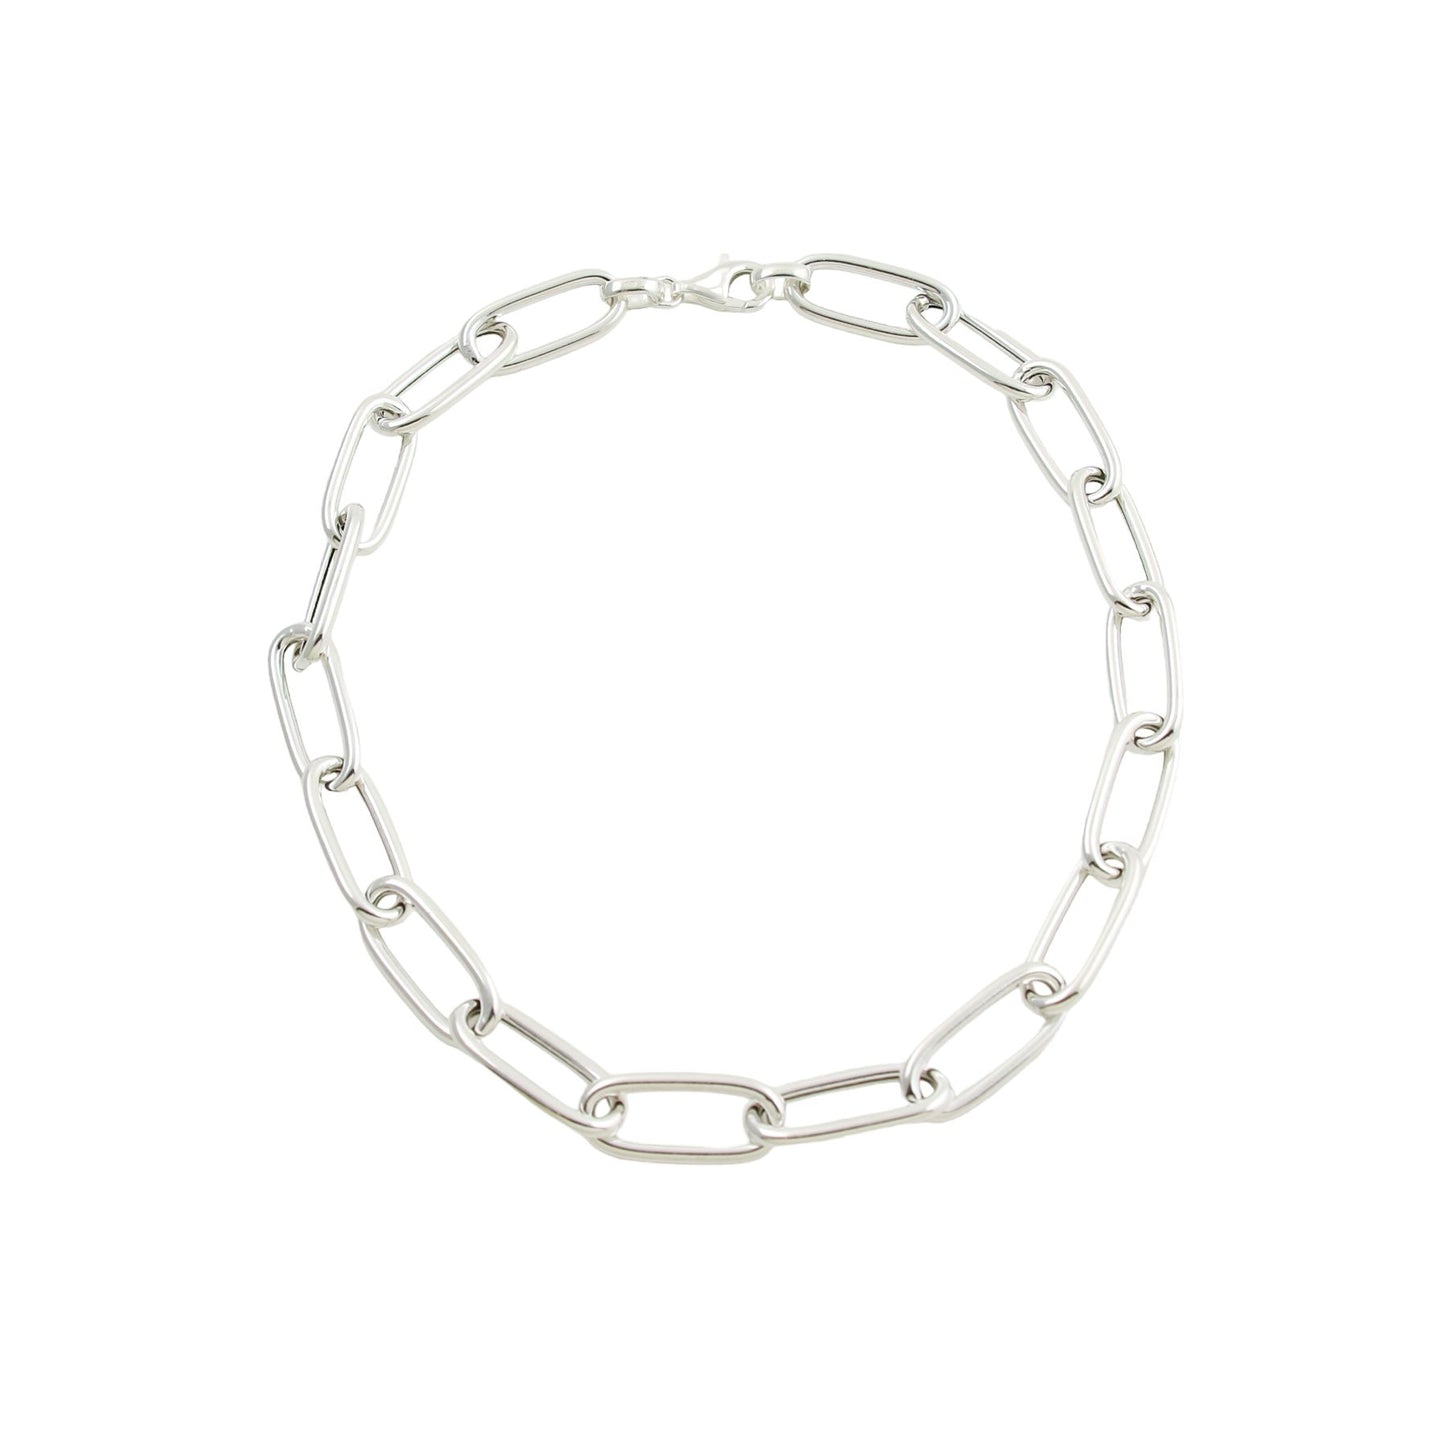 Statement Paper Clip Chain x Sterling Silver - Kingdom Jewelry